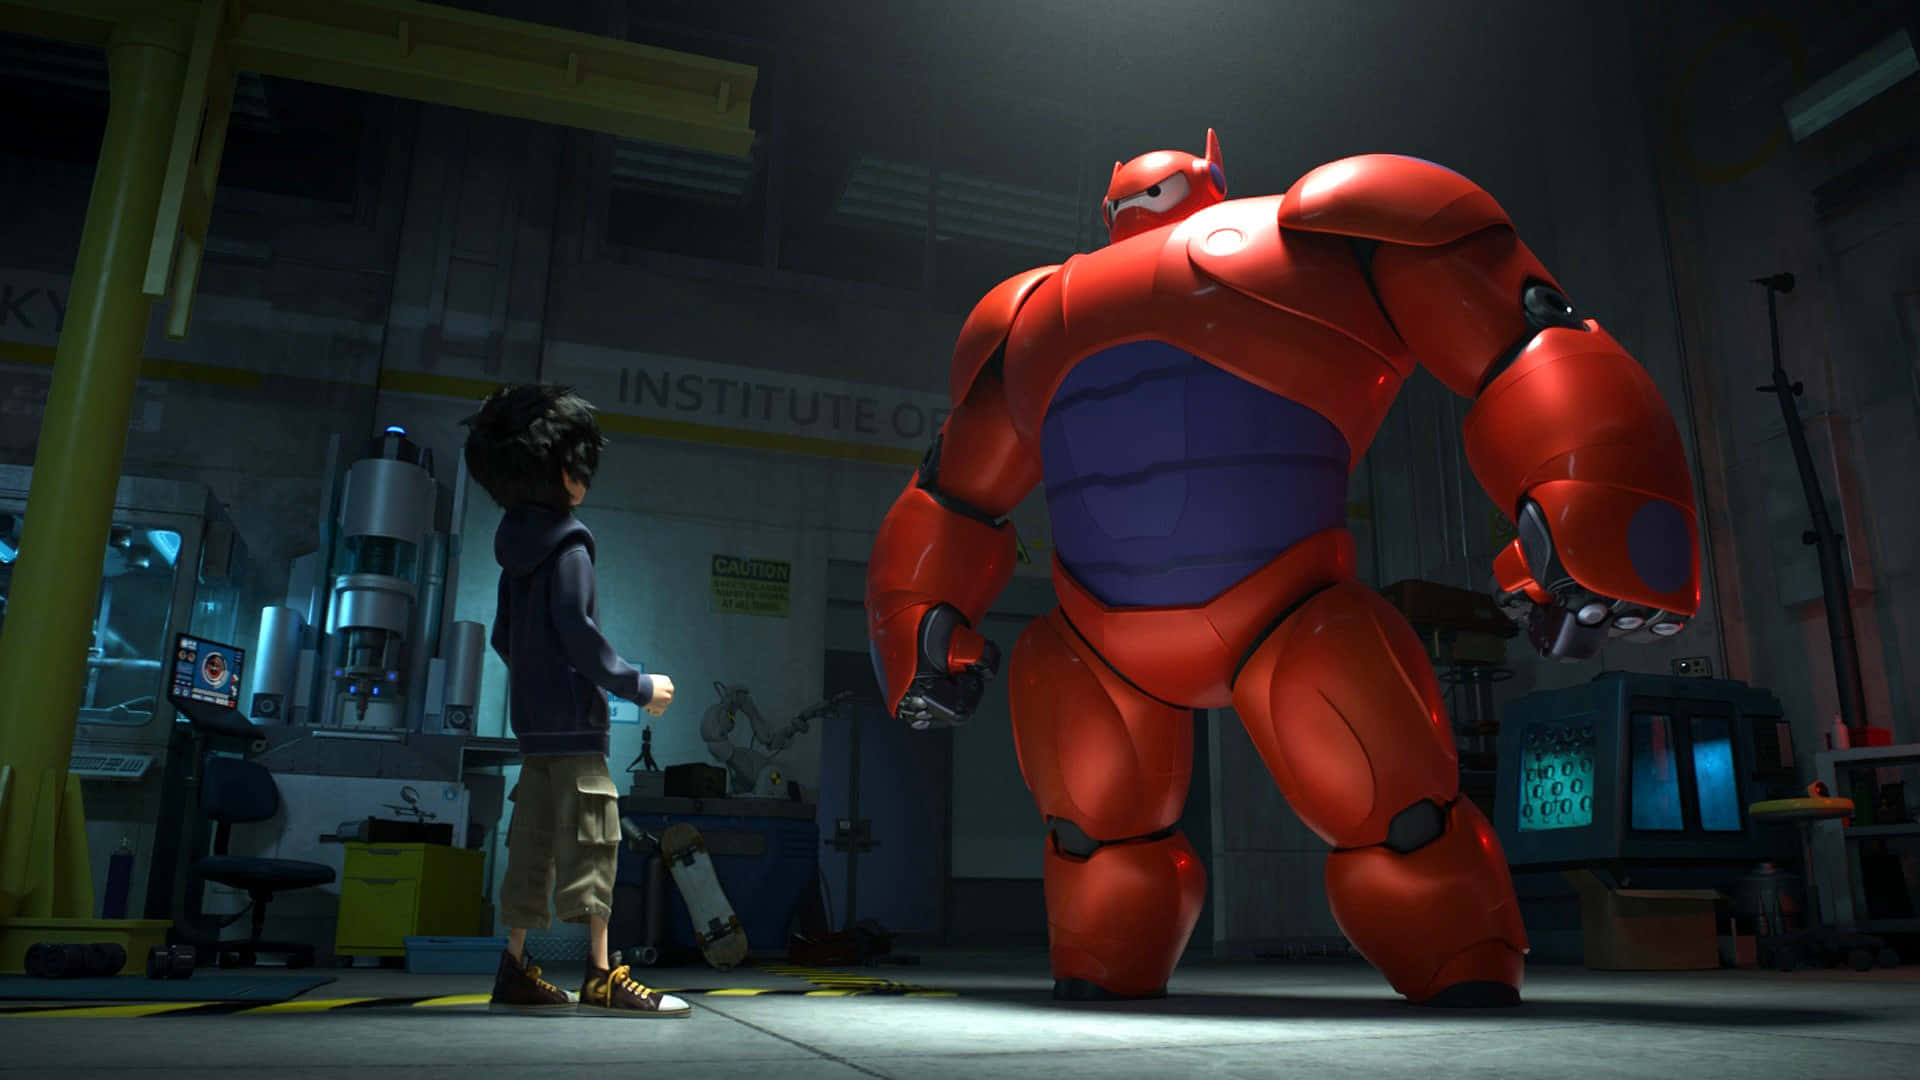 Big Hero 6 - A Boy And A Giant Robot